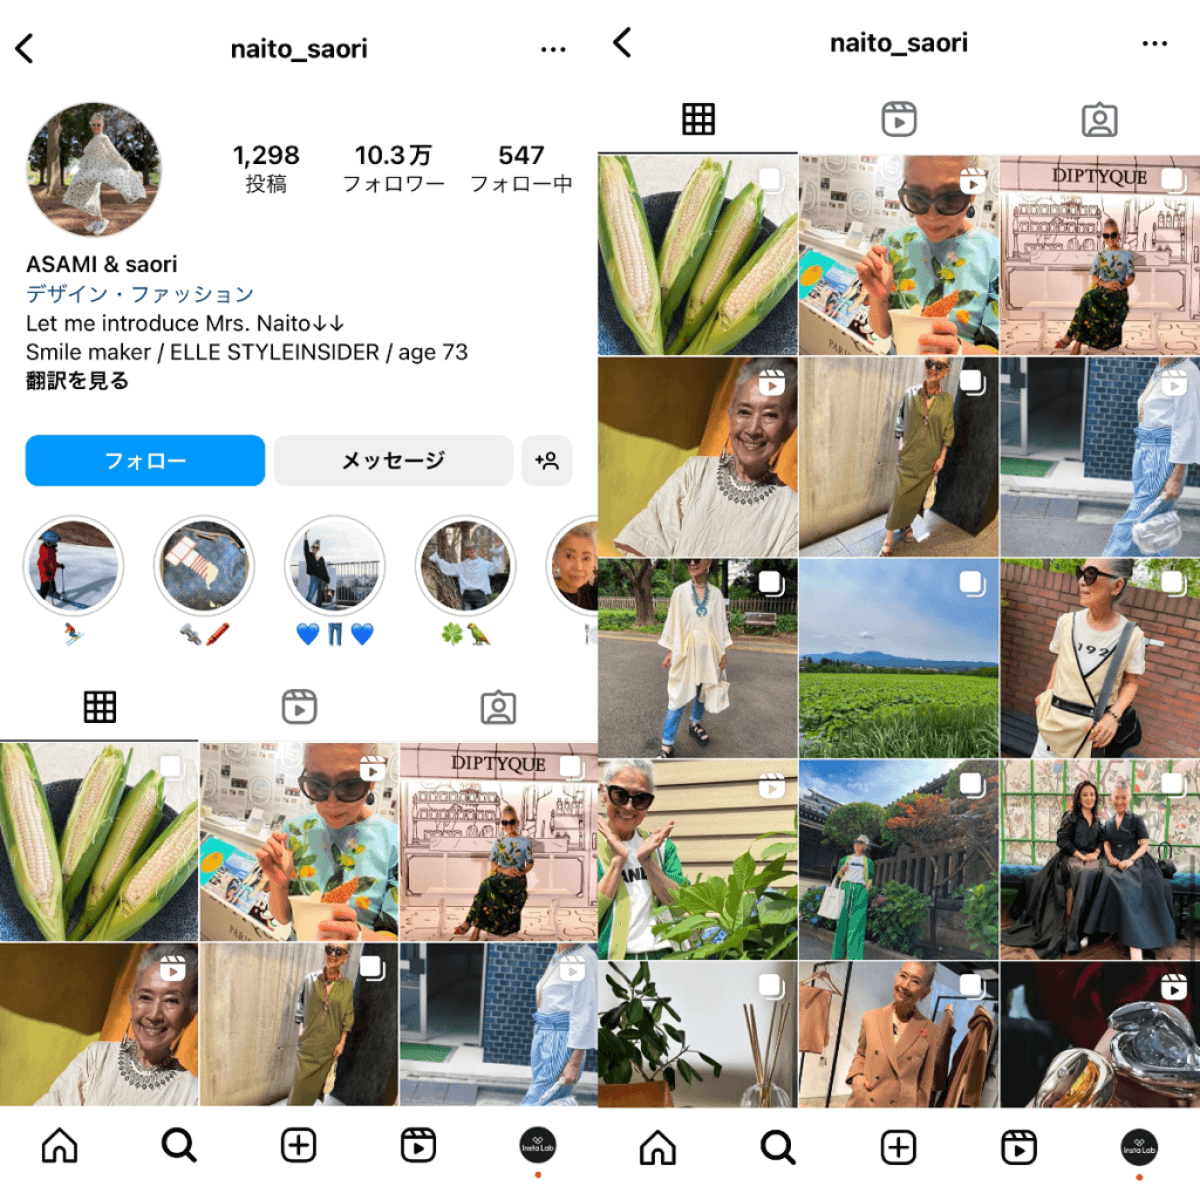 instagram-account-naito-saori